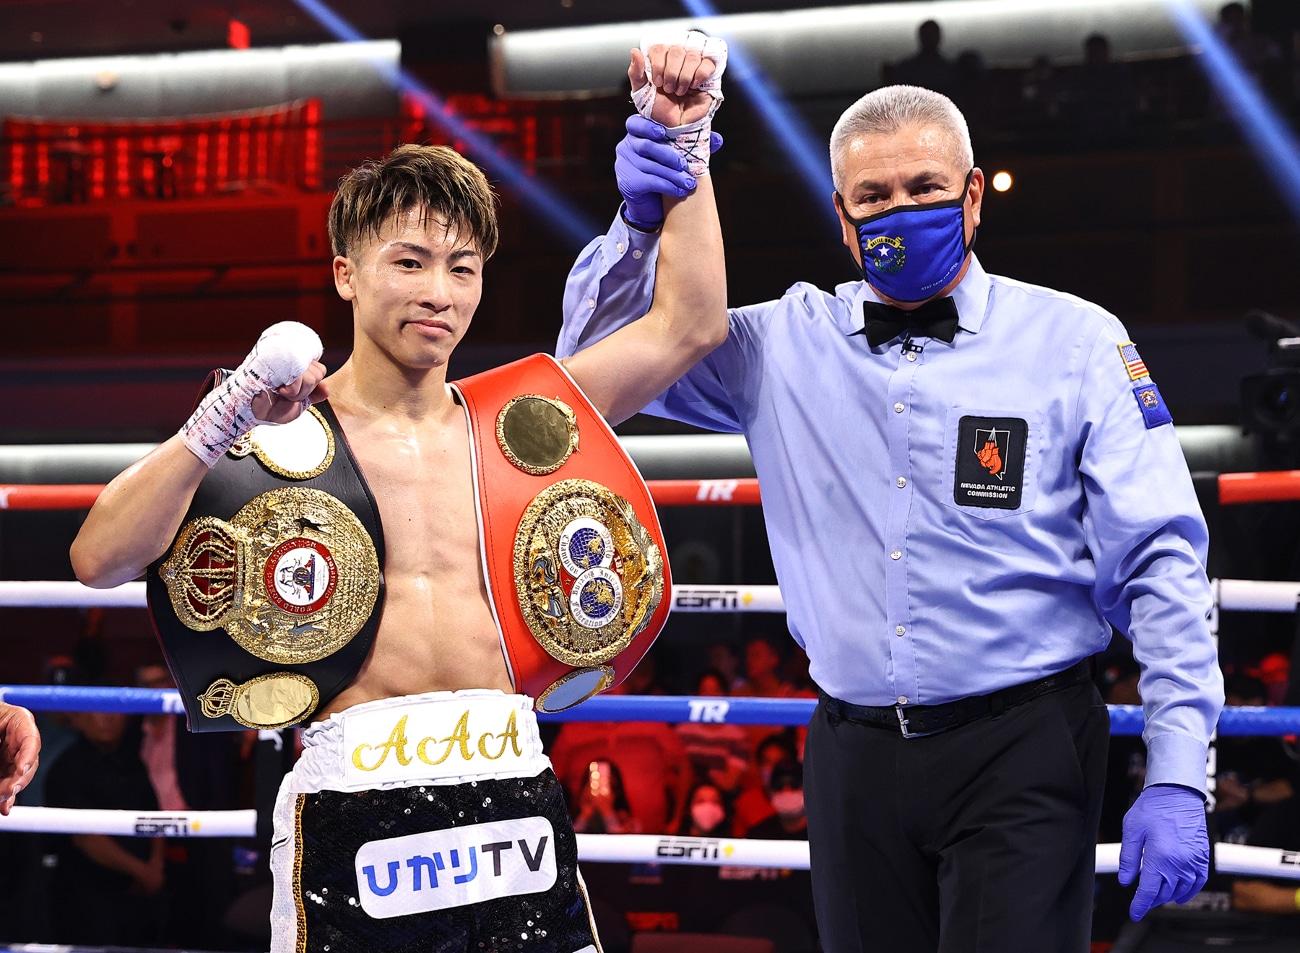 Naoya Inoue Destroys Michael Dasmarinas in 3rd round KO - Boxing Results